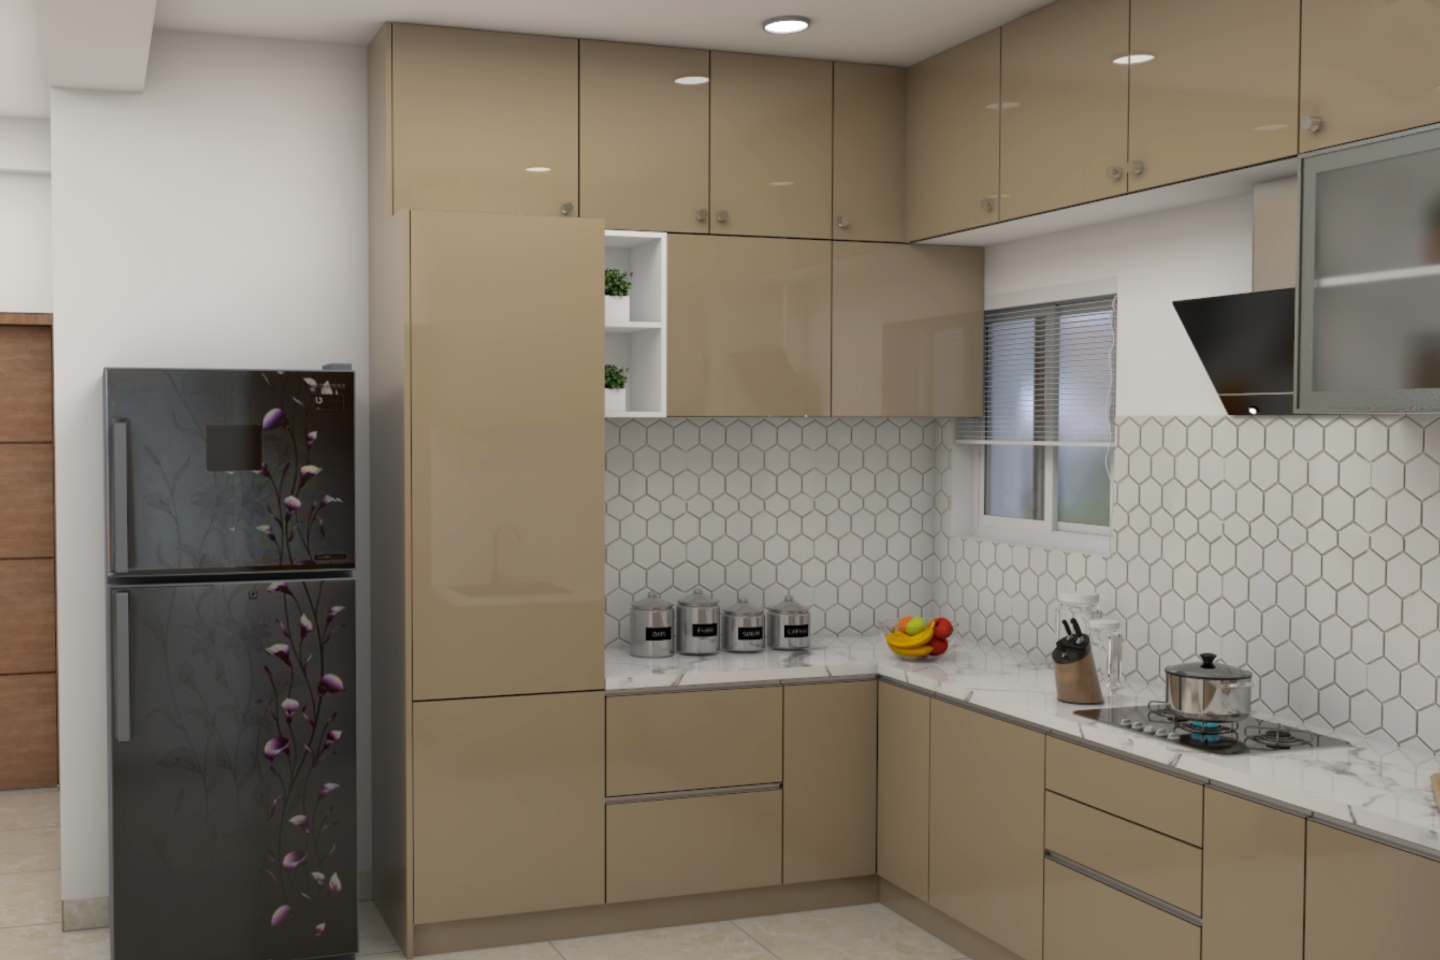 Modern Kitchen Designed For Convenience - Livspace